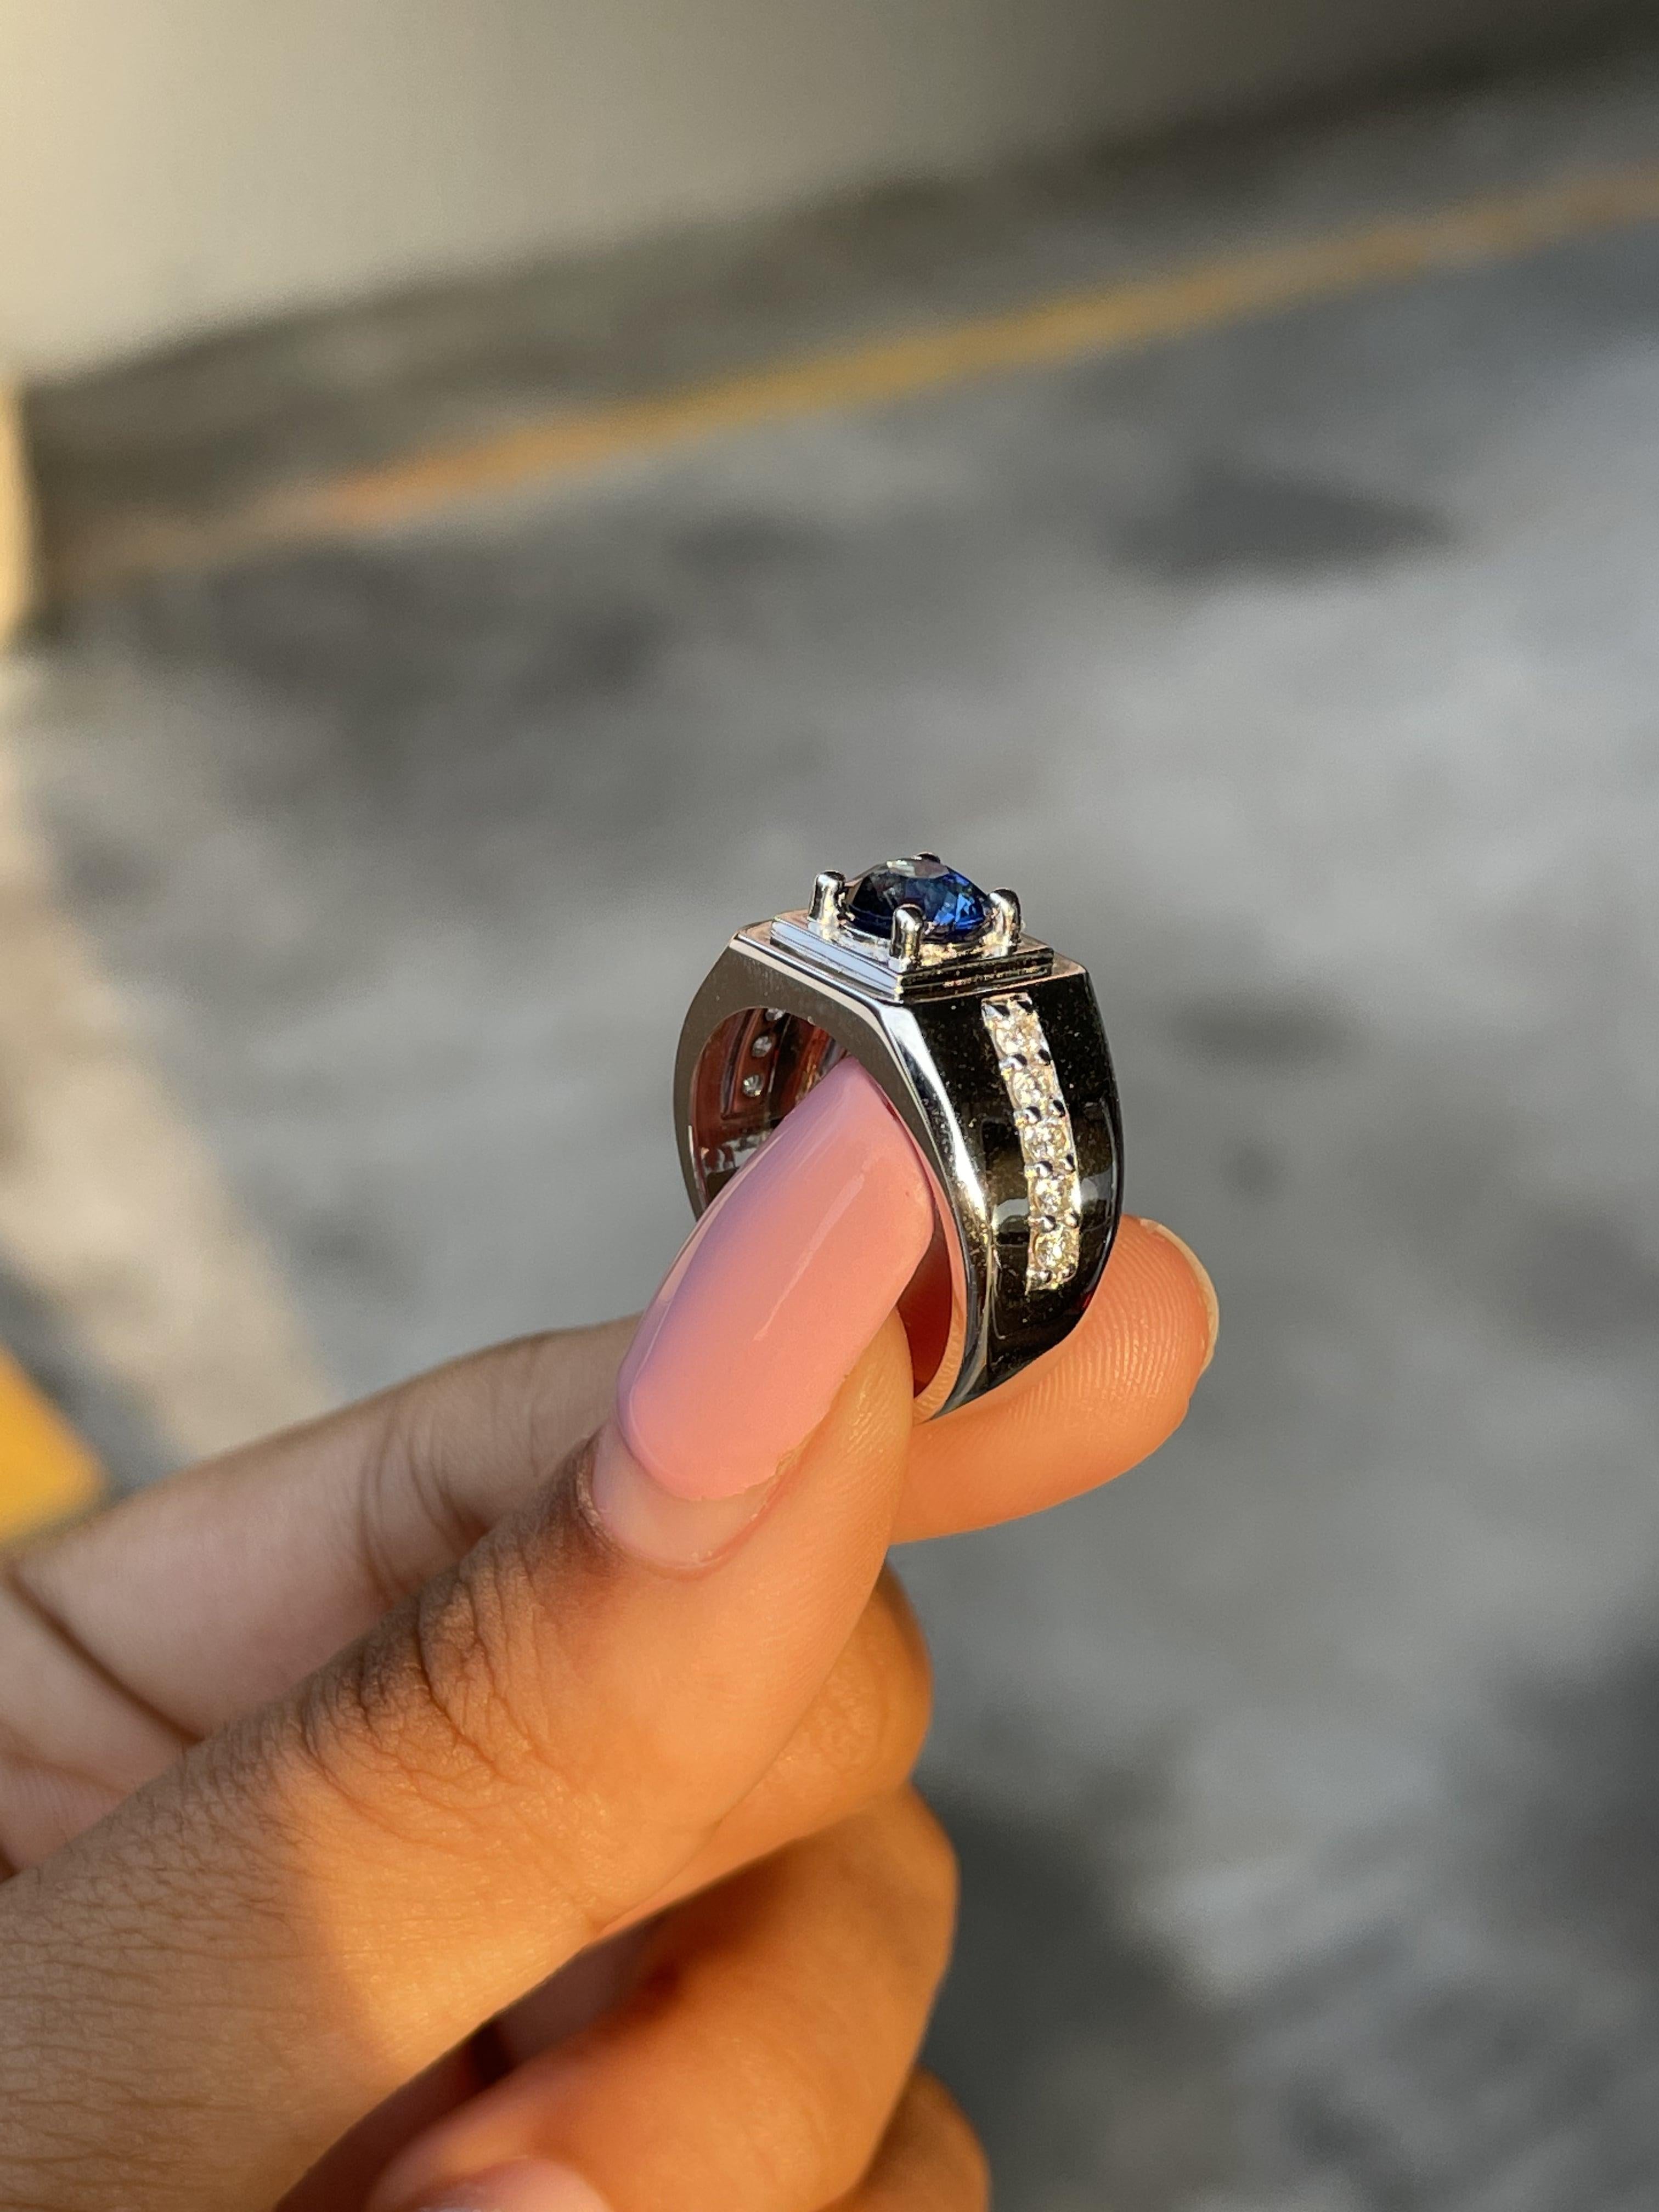 Men's 1.37 Ct Ceylon Blue Sapphire Ring in 18K White Gold For Sale 2